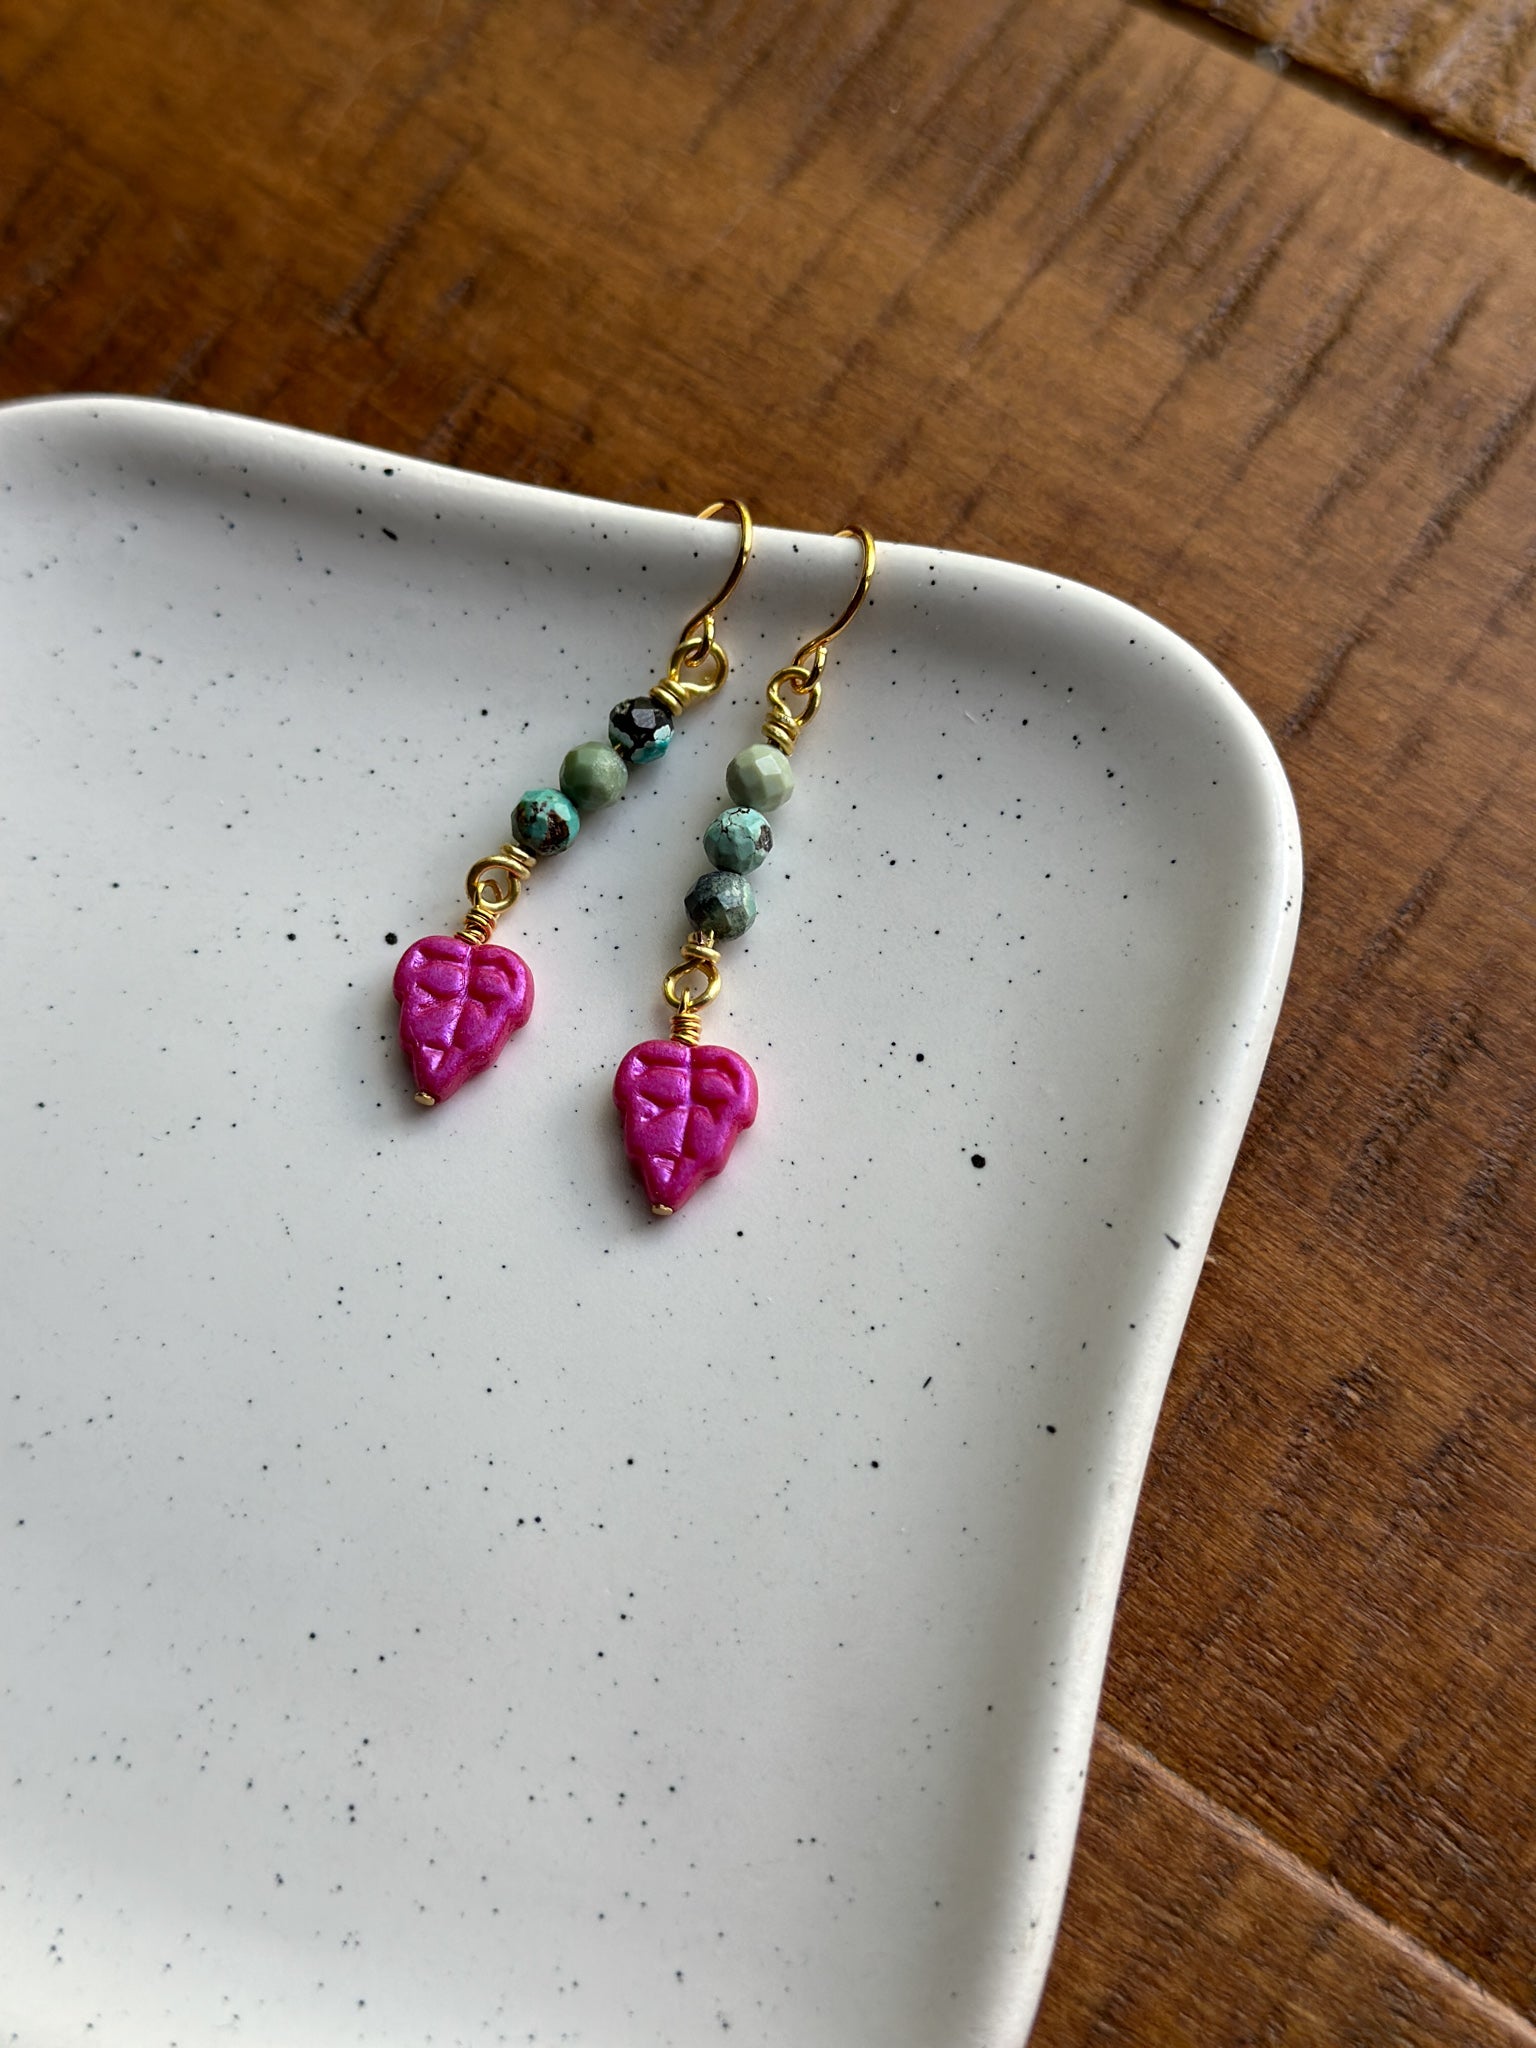 Czech Glass Earrings with Artisan Flower Beads, Mint Green and